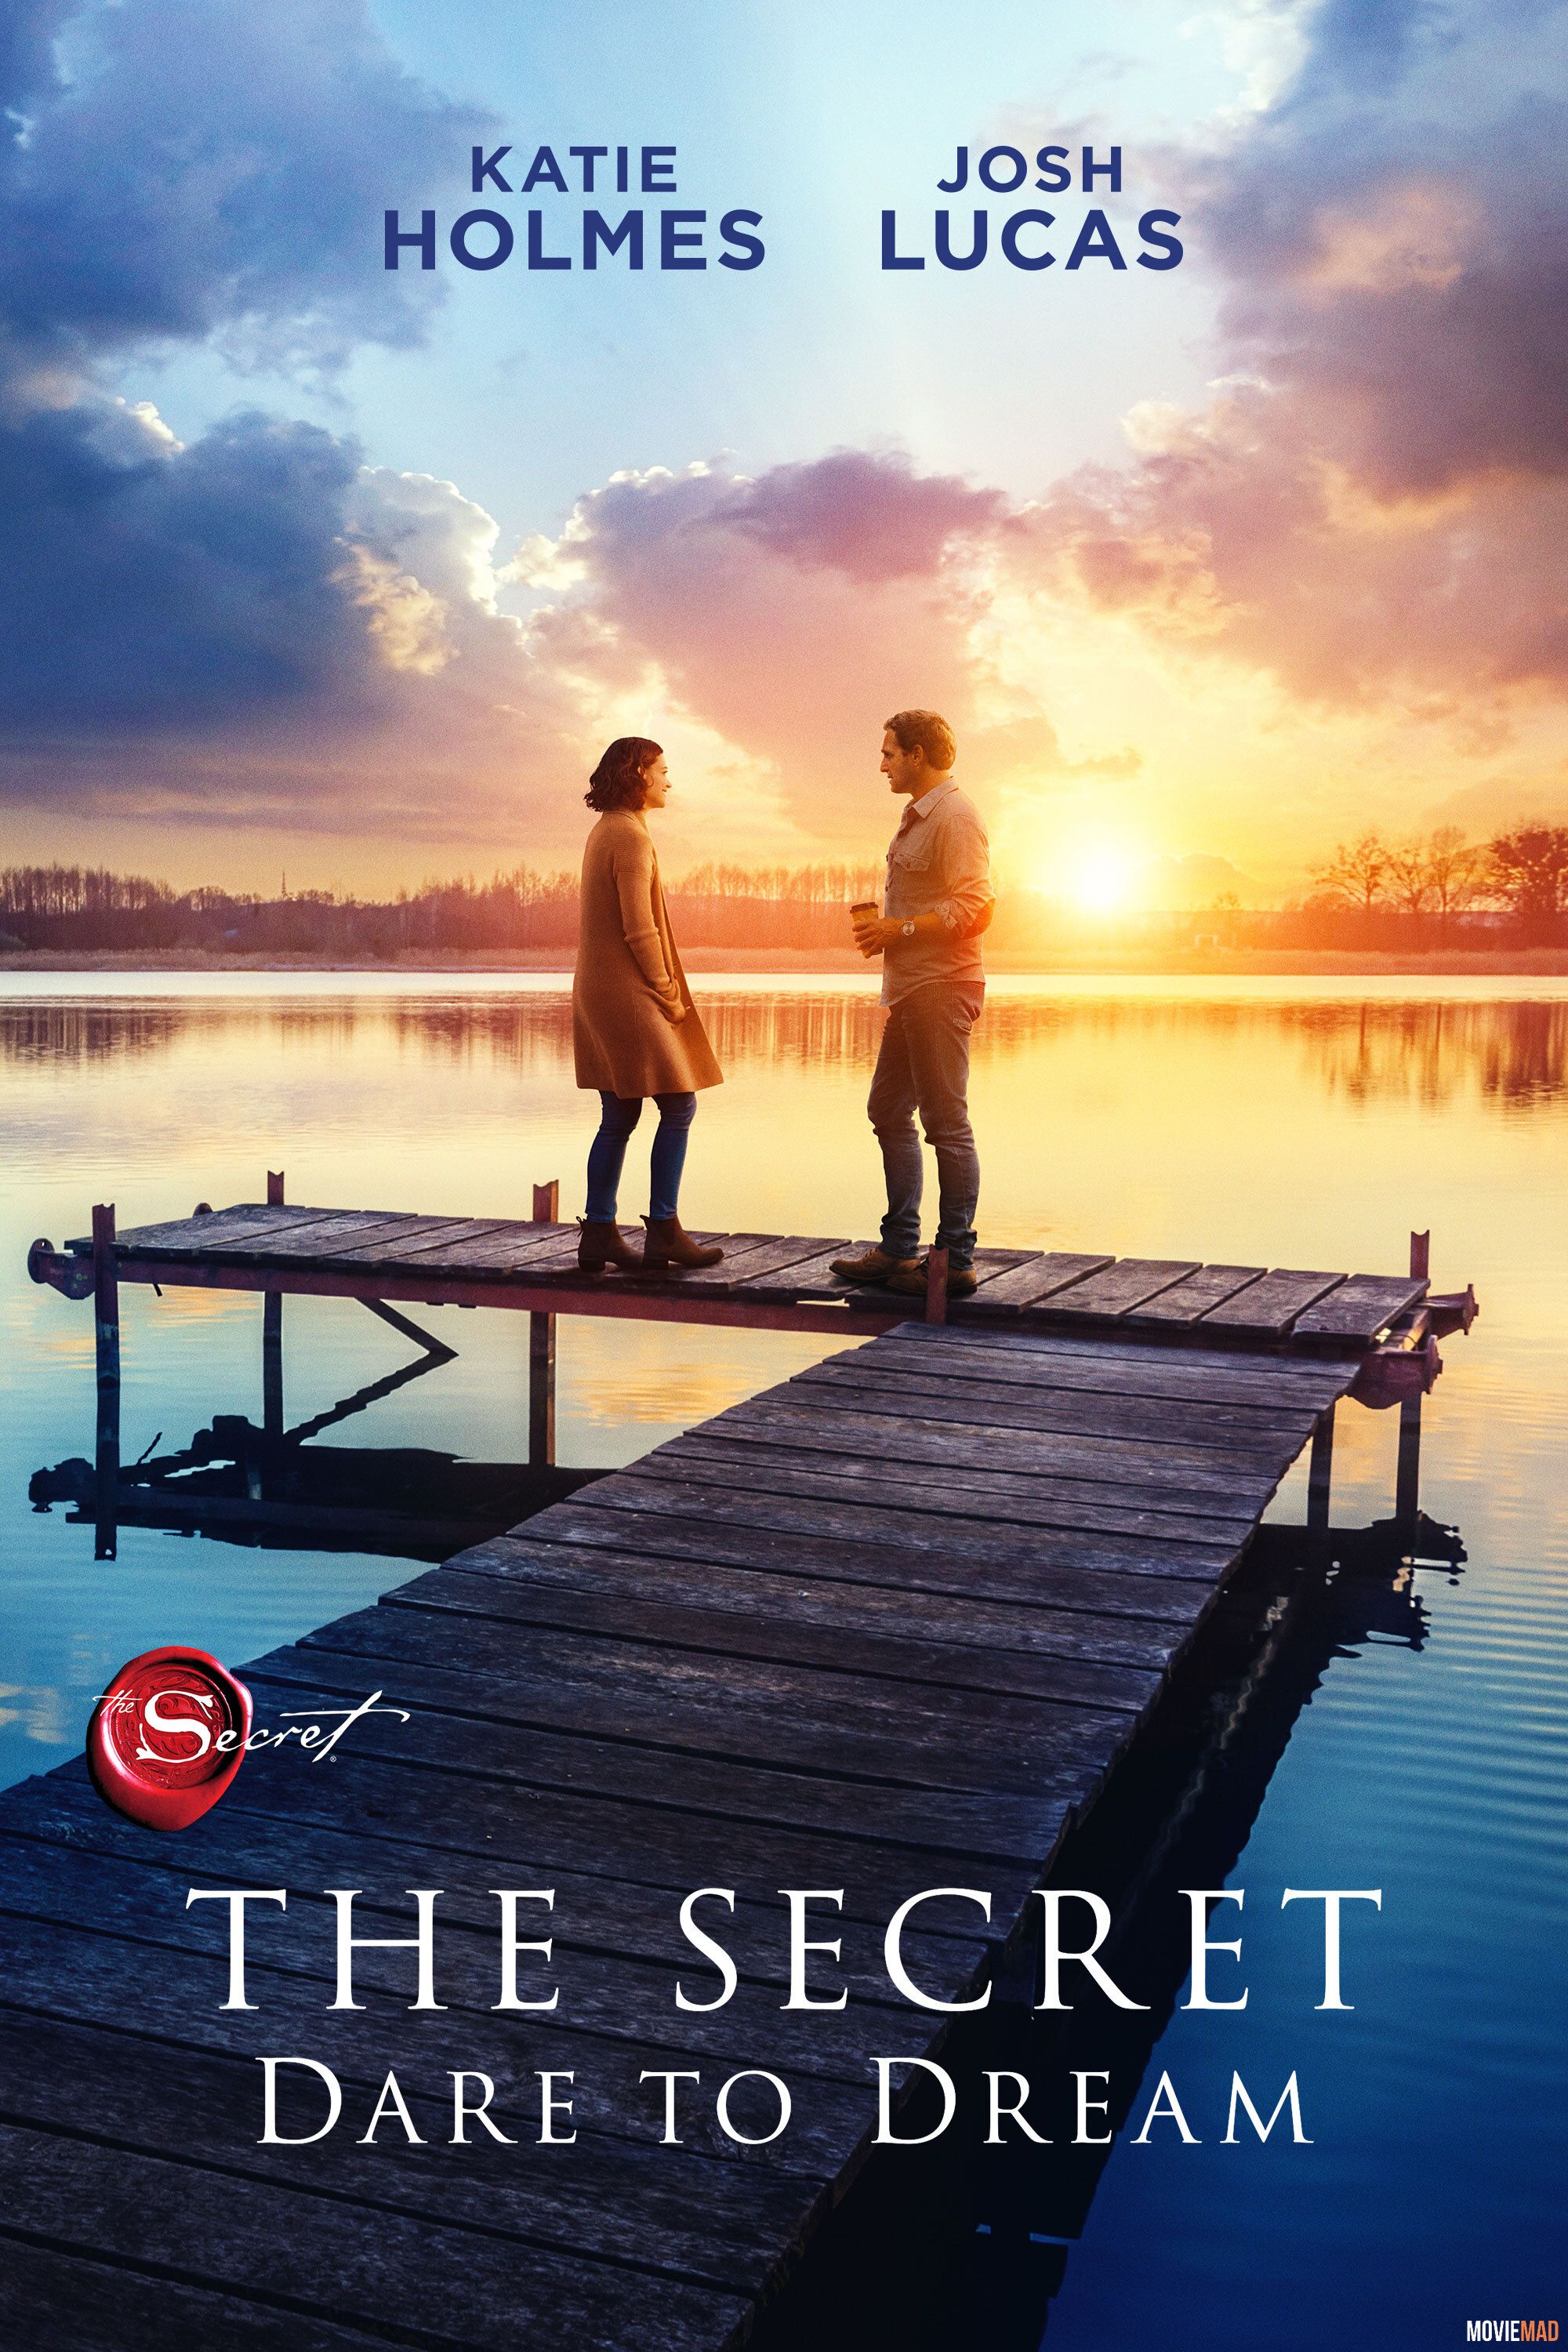 The Secret: Dare to Dream 2020 English WEB DL Full Movie 720p 480p